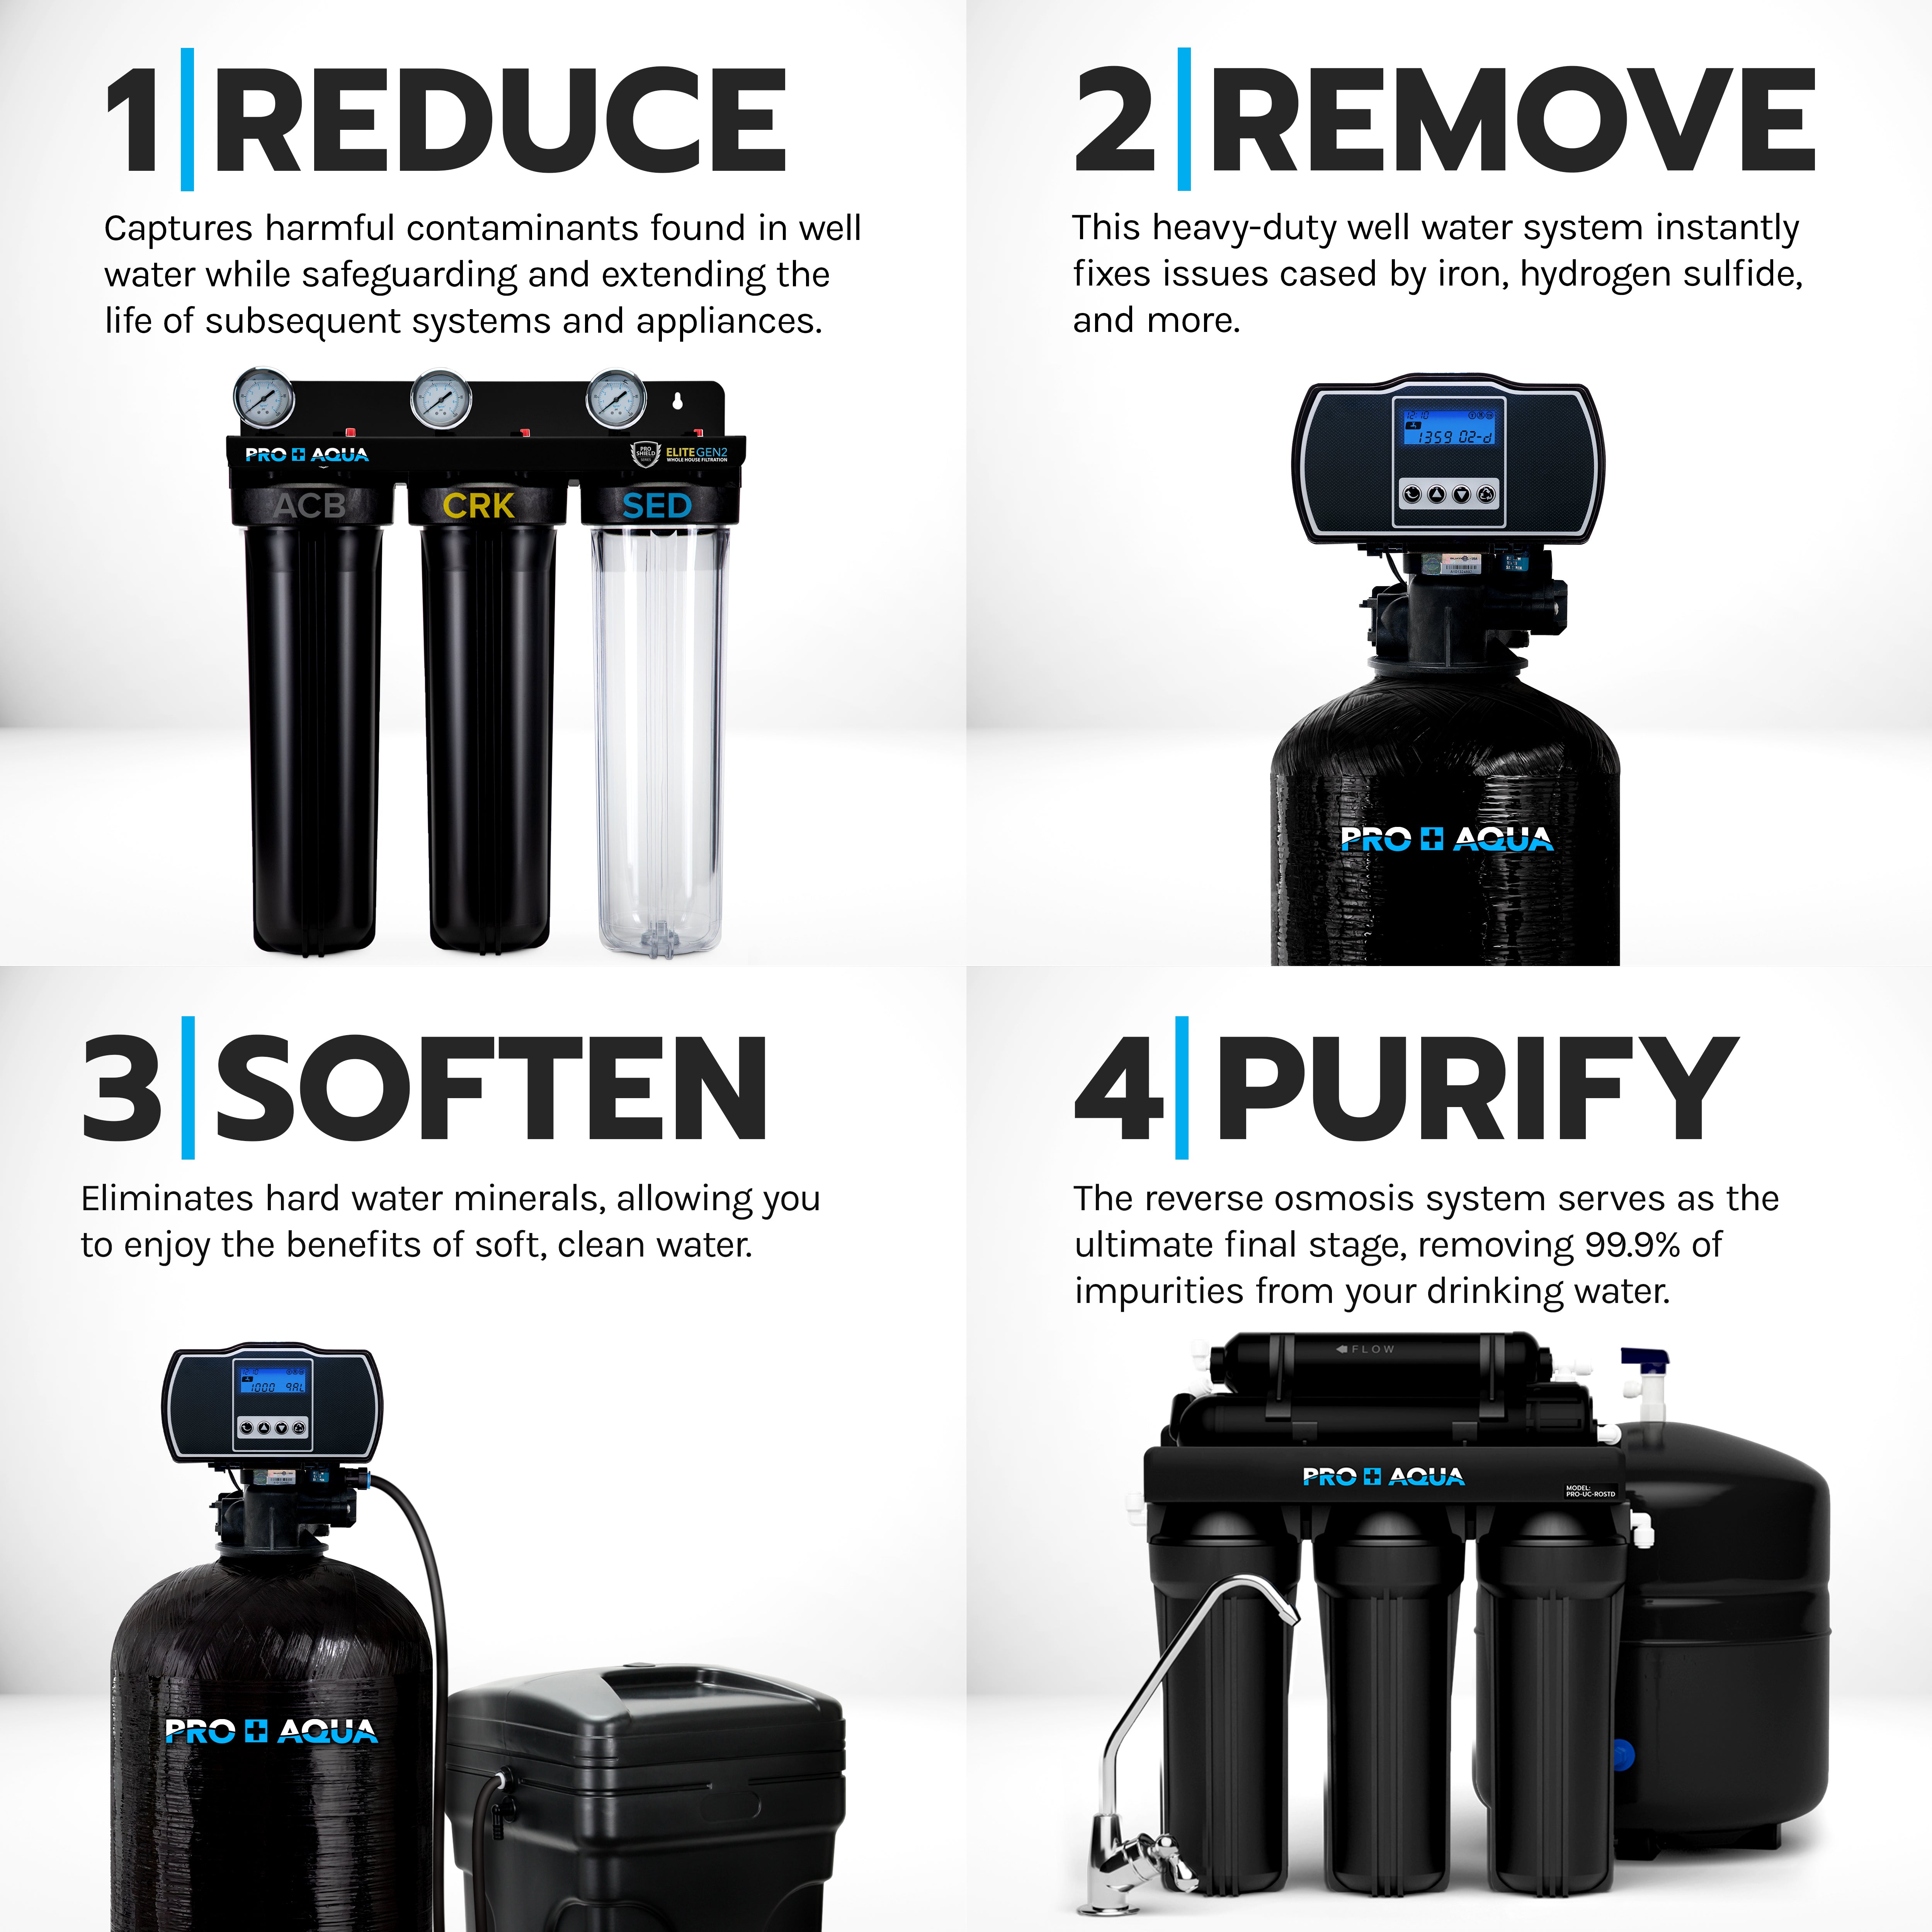 PRO+AQUA WS-P-REG-KITV2 Premium Dual RV/Marine Water Softener Regeneration  Kit and Water Filter, Reduces Bad Taste, Odor, Sediment, Chlorine